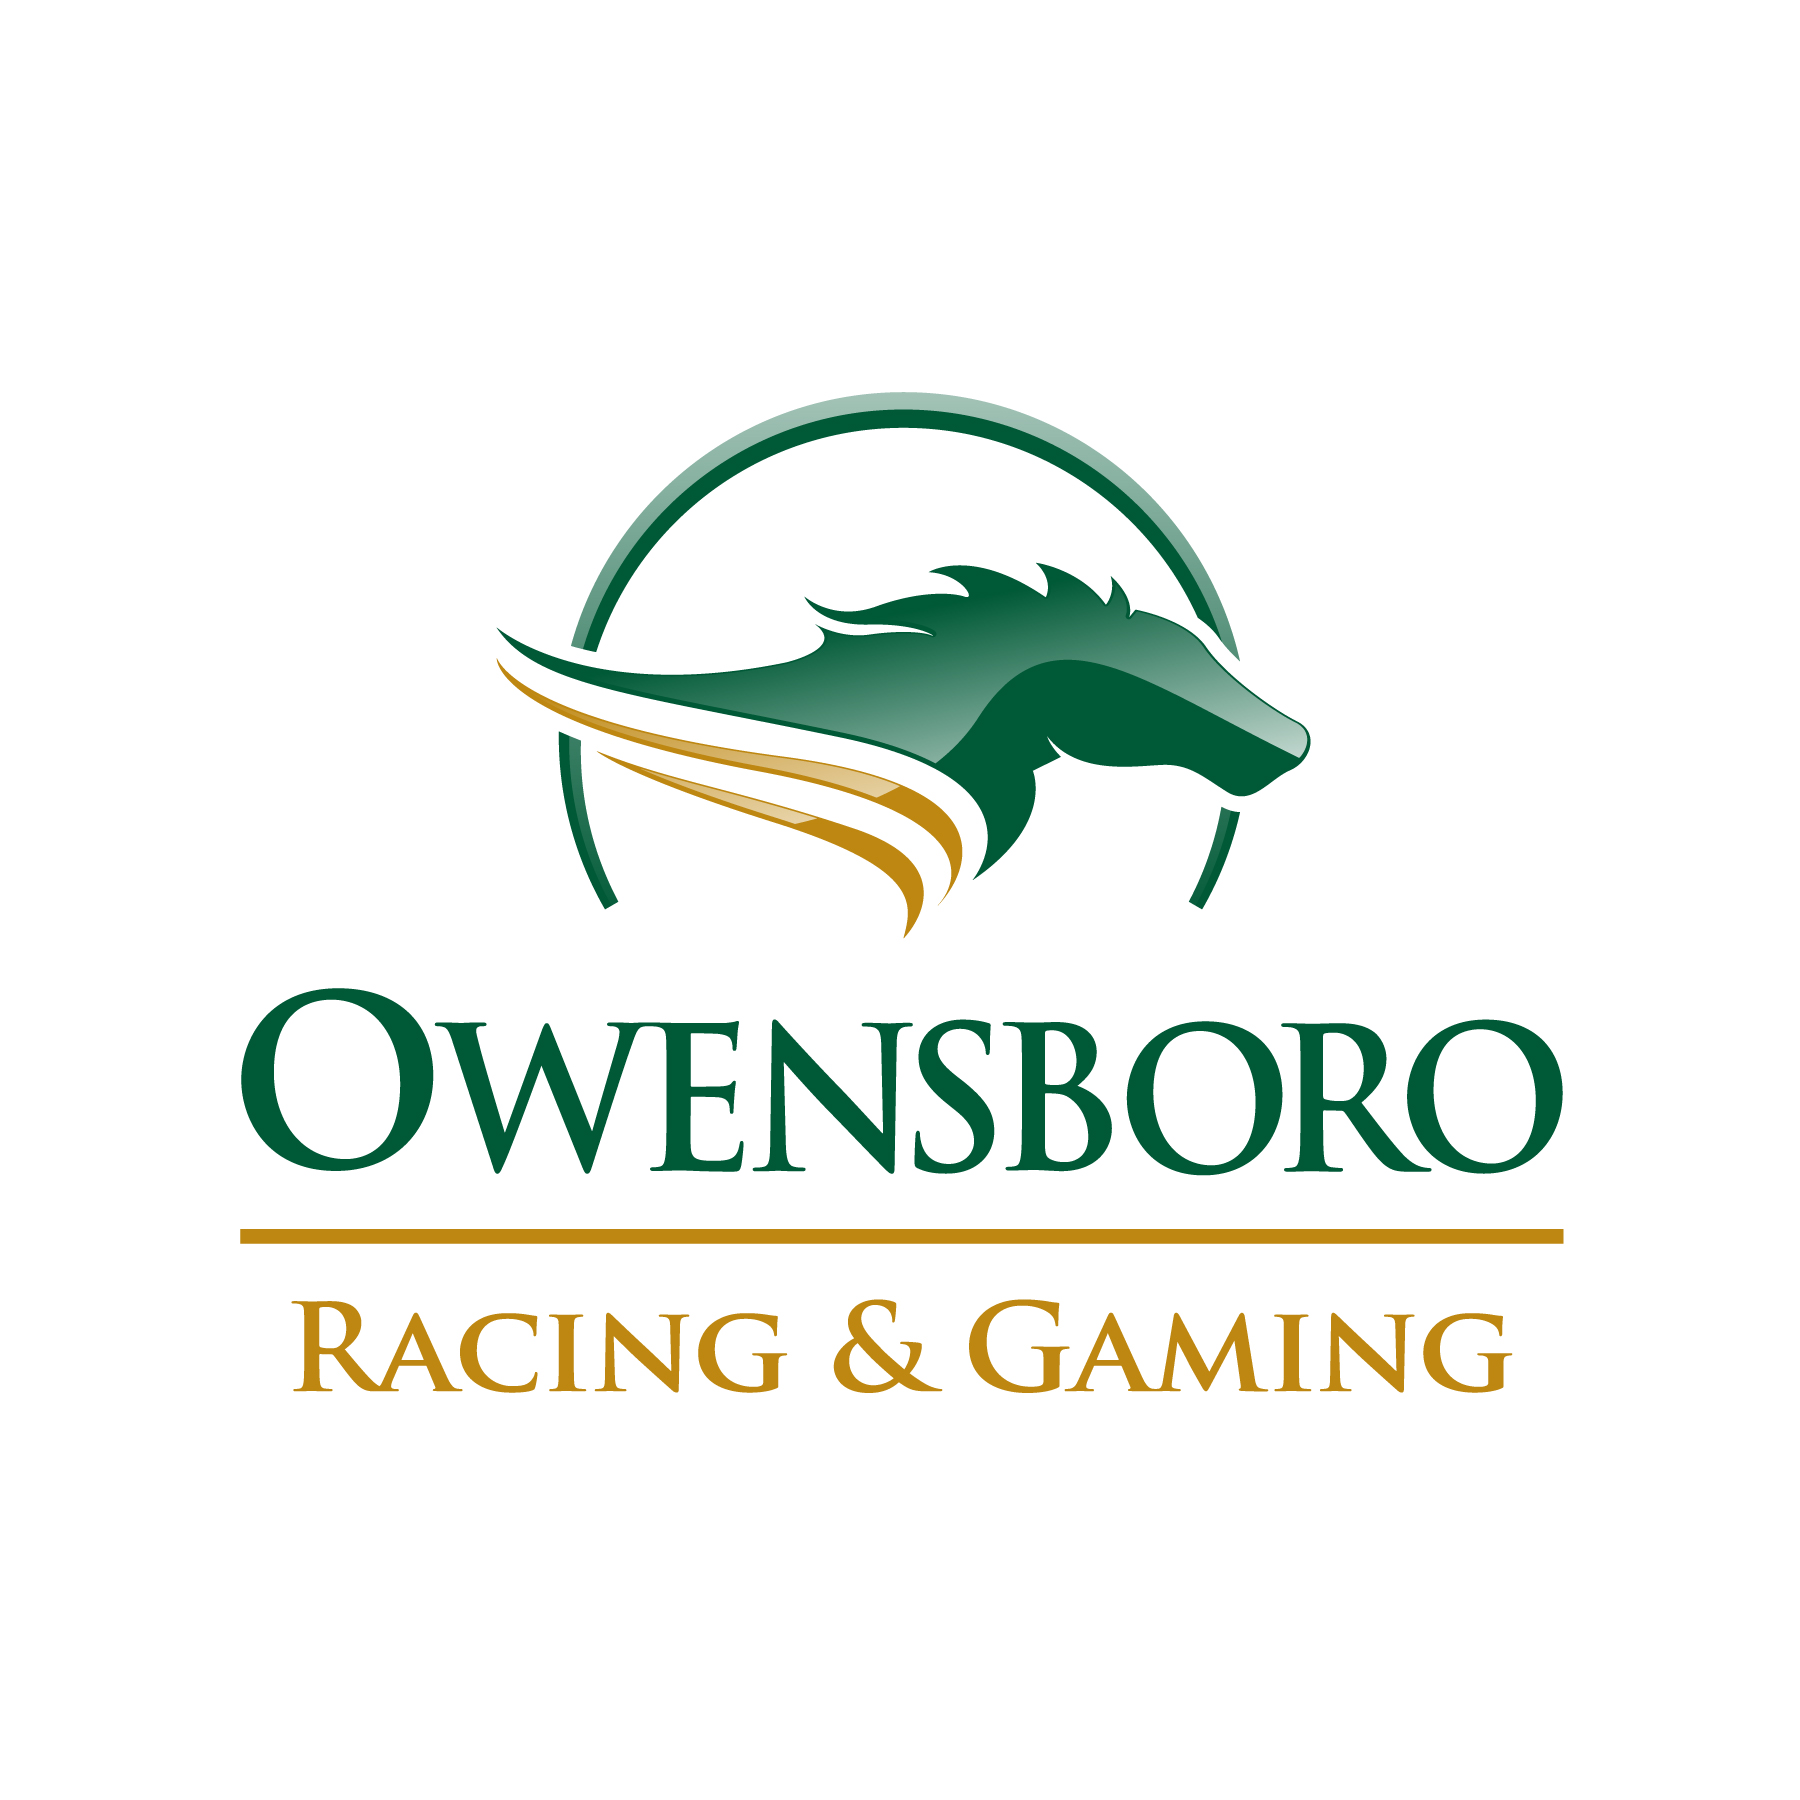 Owensboro Racing & Gaming